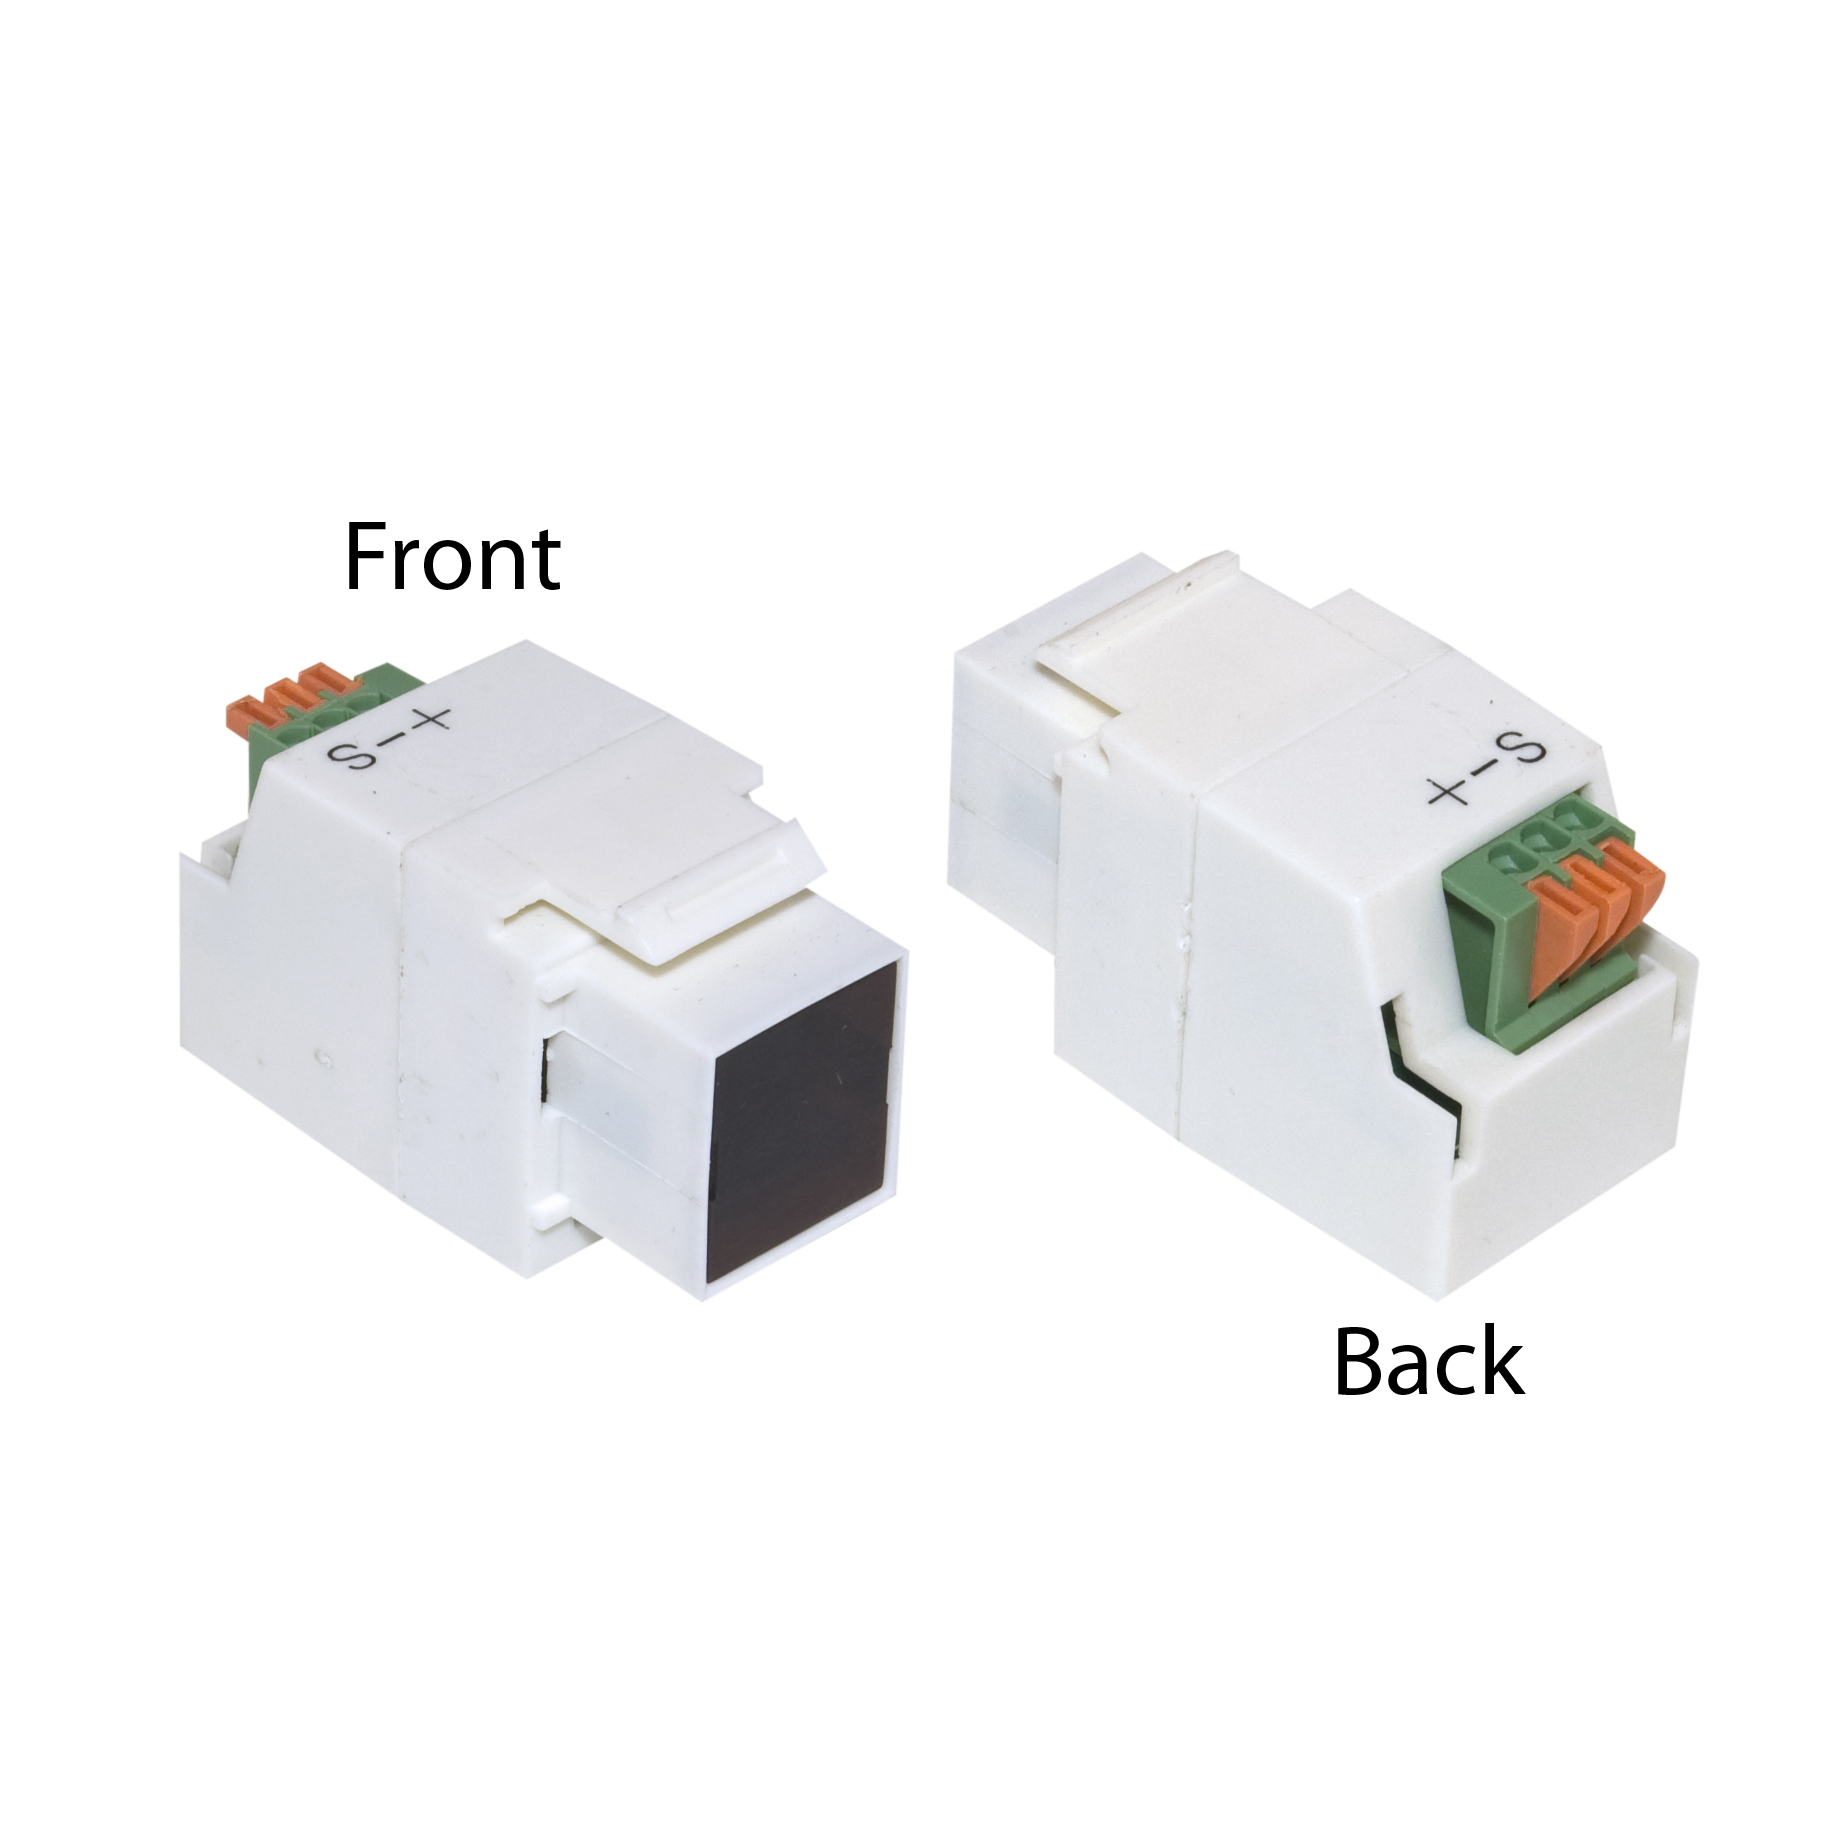 WPIN-IR1: IR Dual Band Keystone Receiver - White